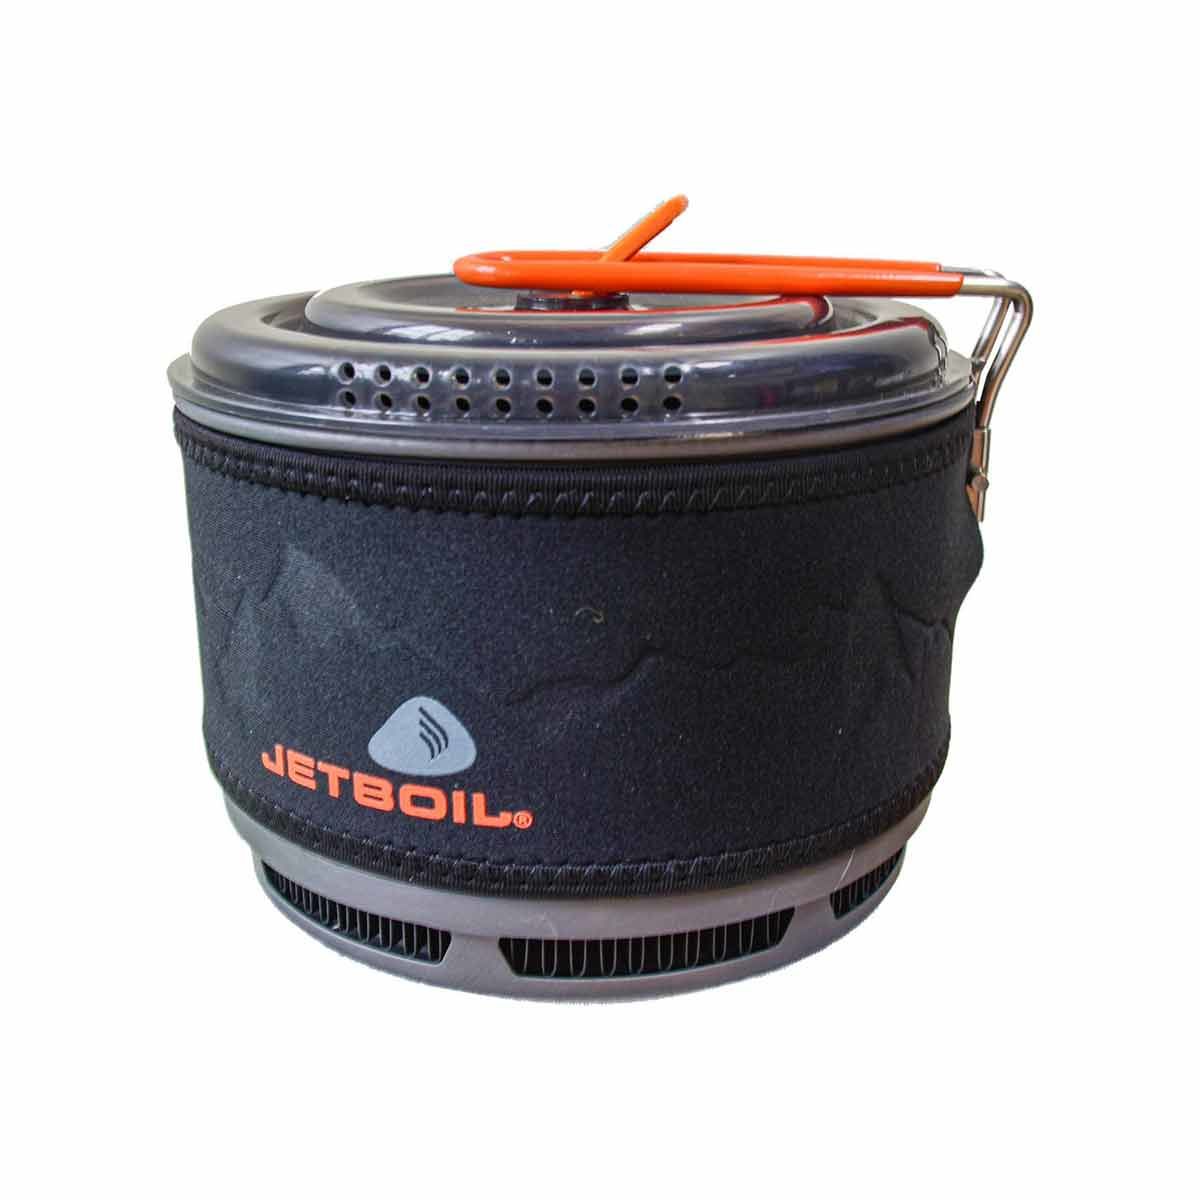 Jetboil Fluxring cooking pot - 1.5L